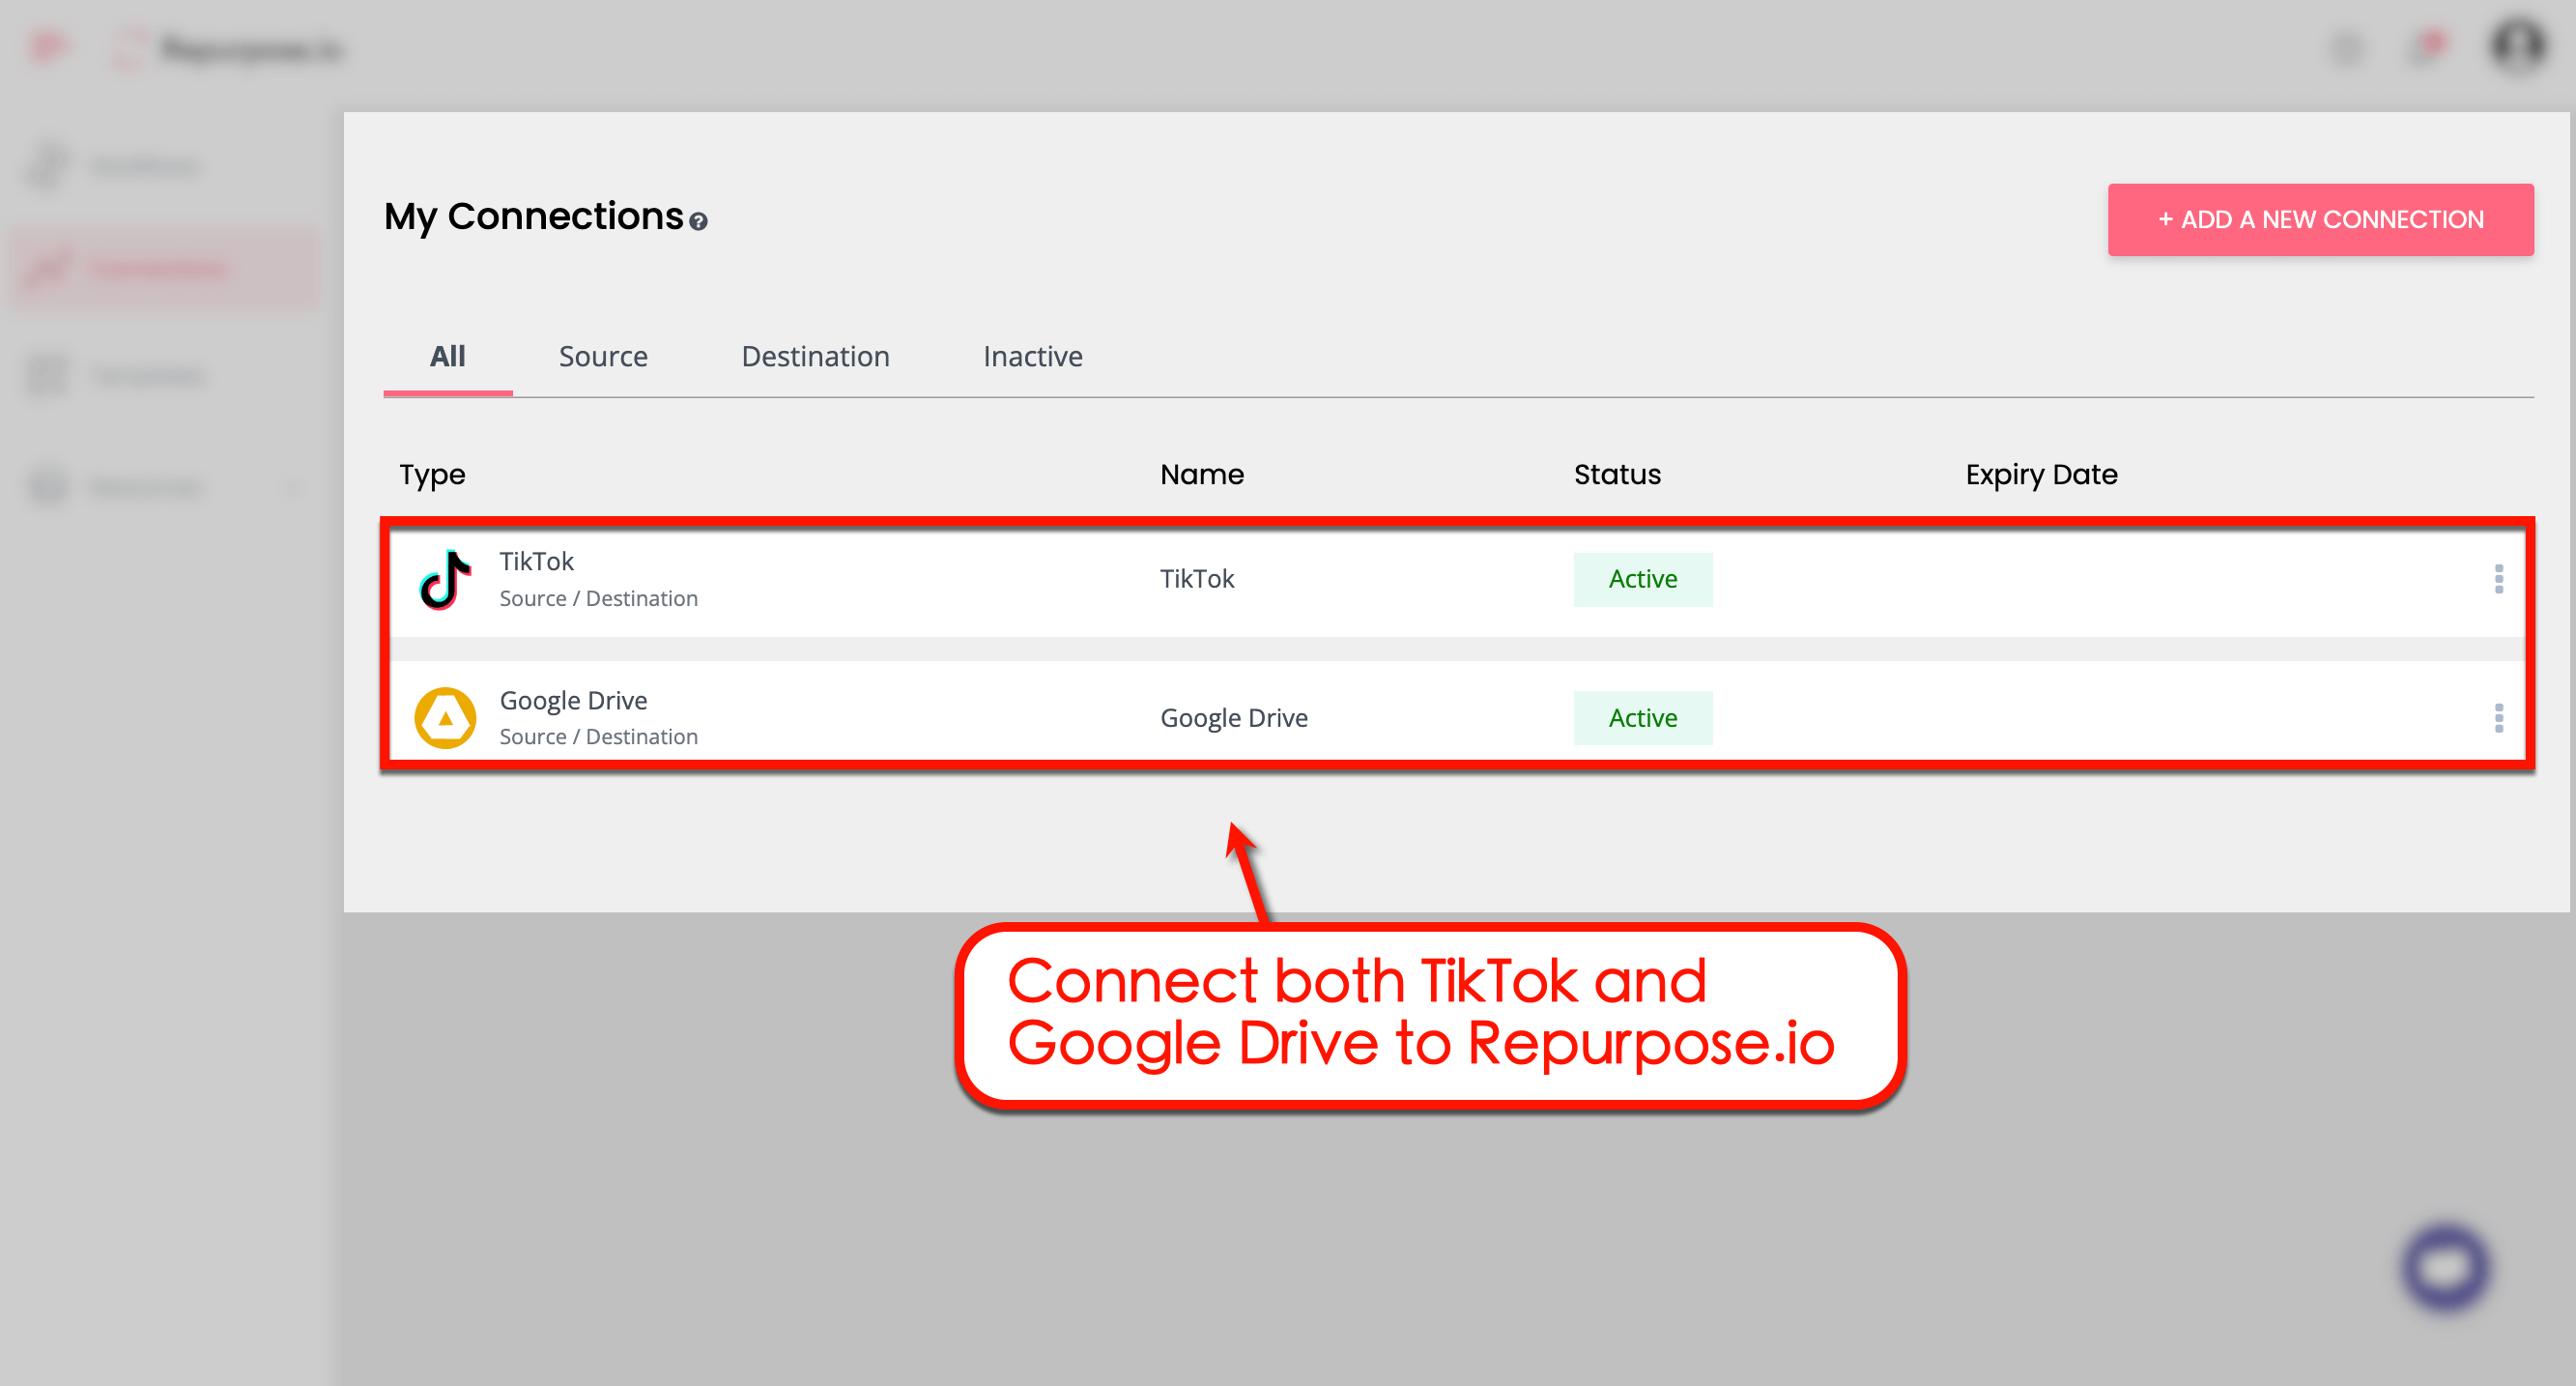 Connect both TikTok and Googe Drive to Repurpose.io 